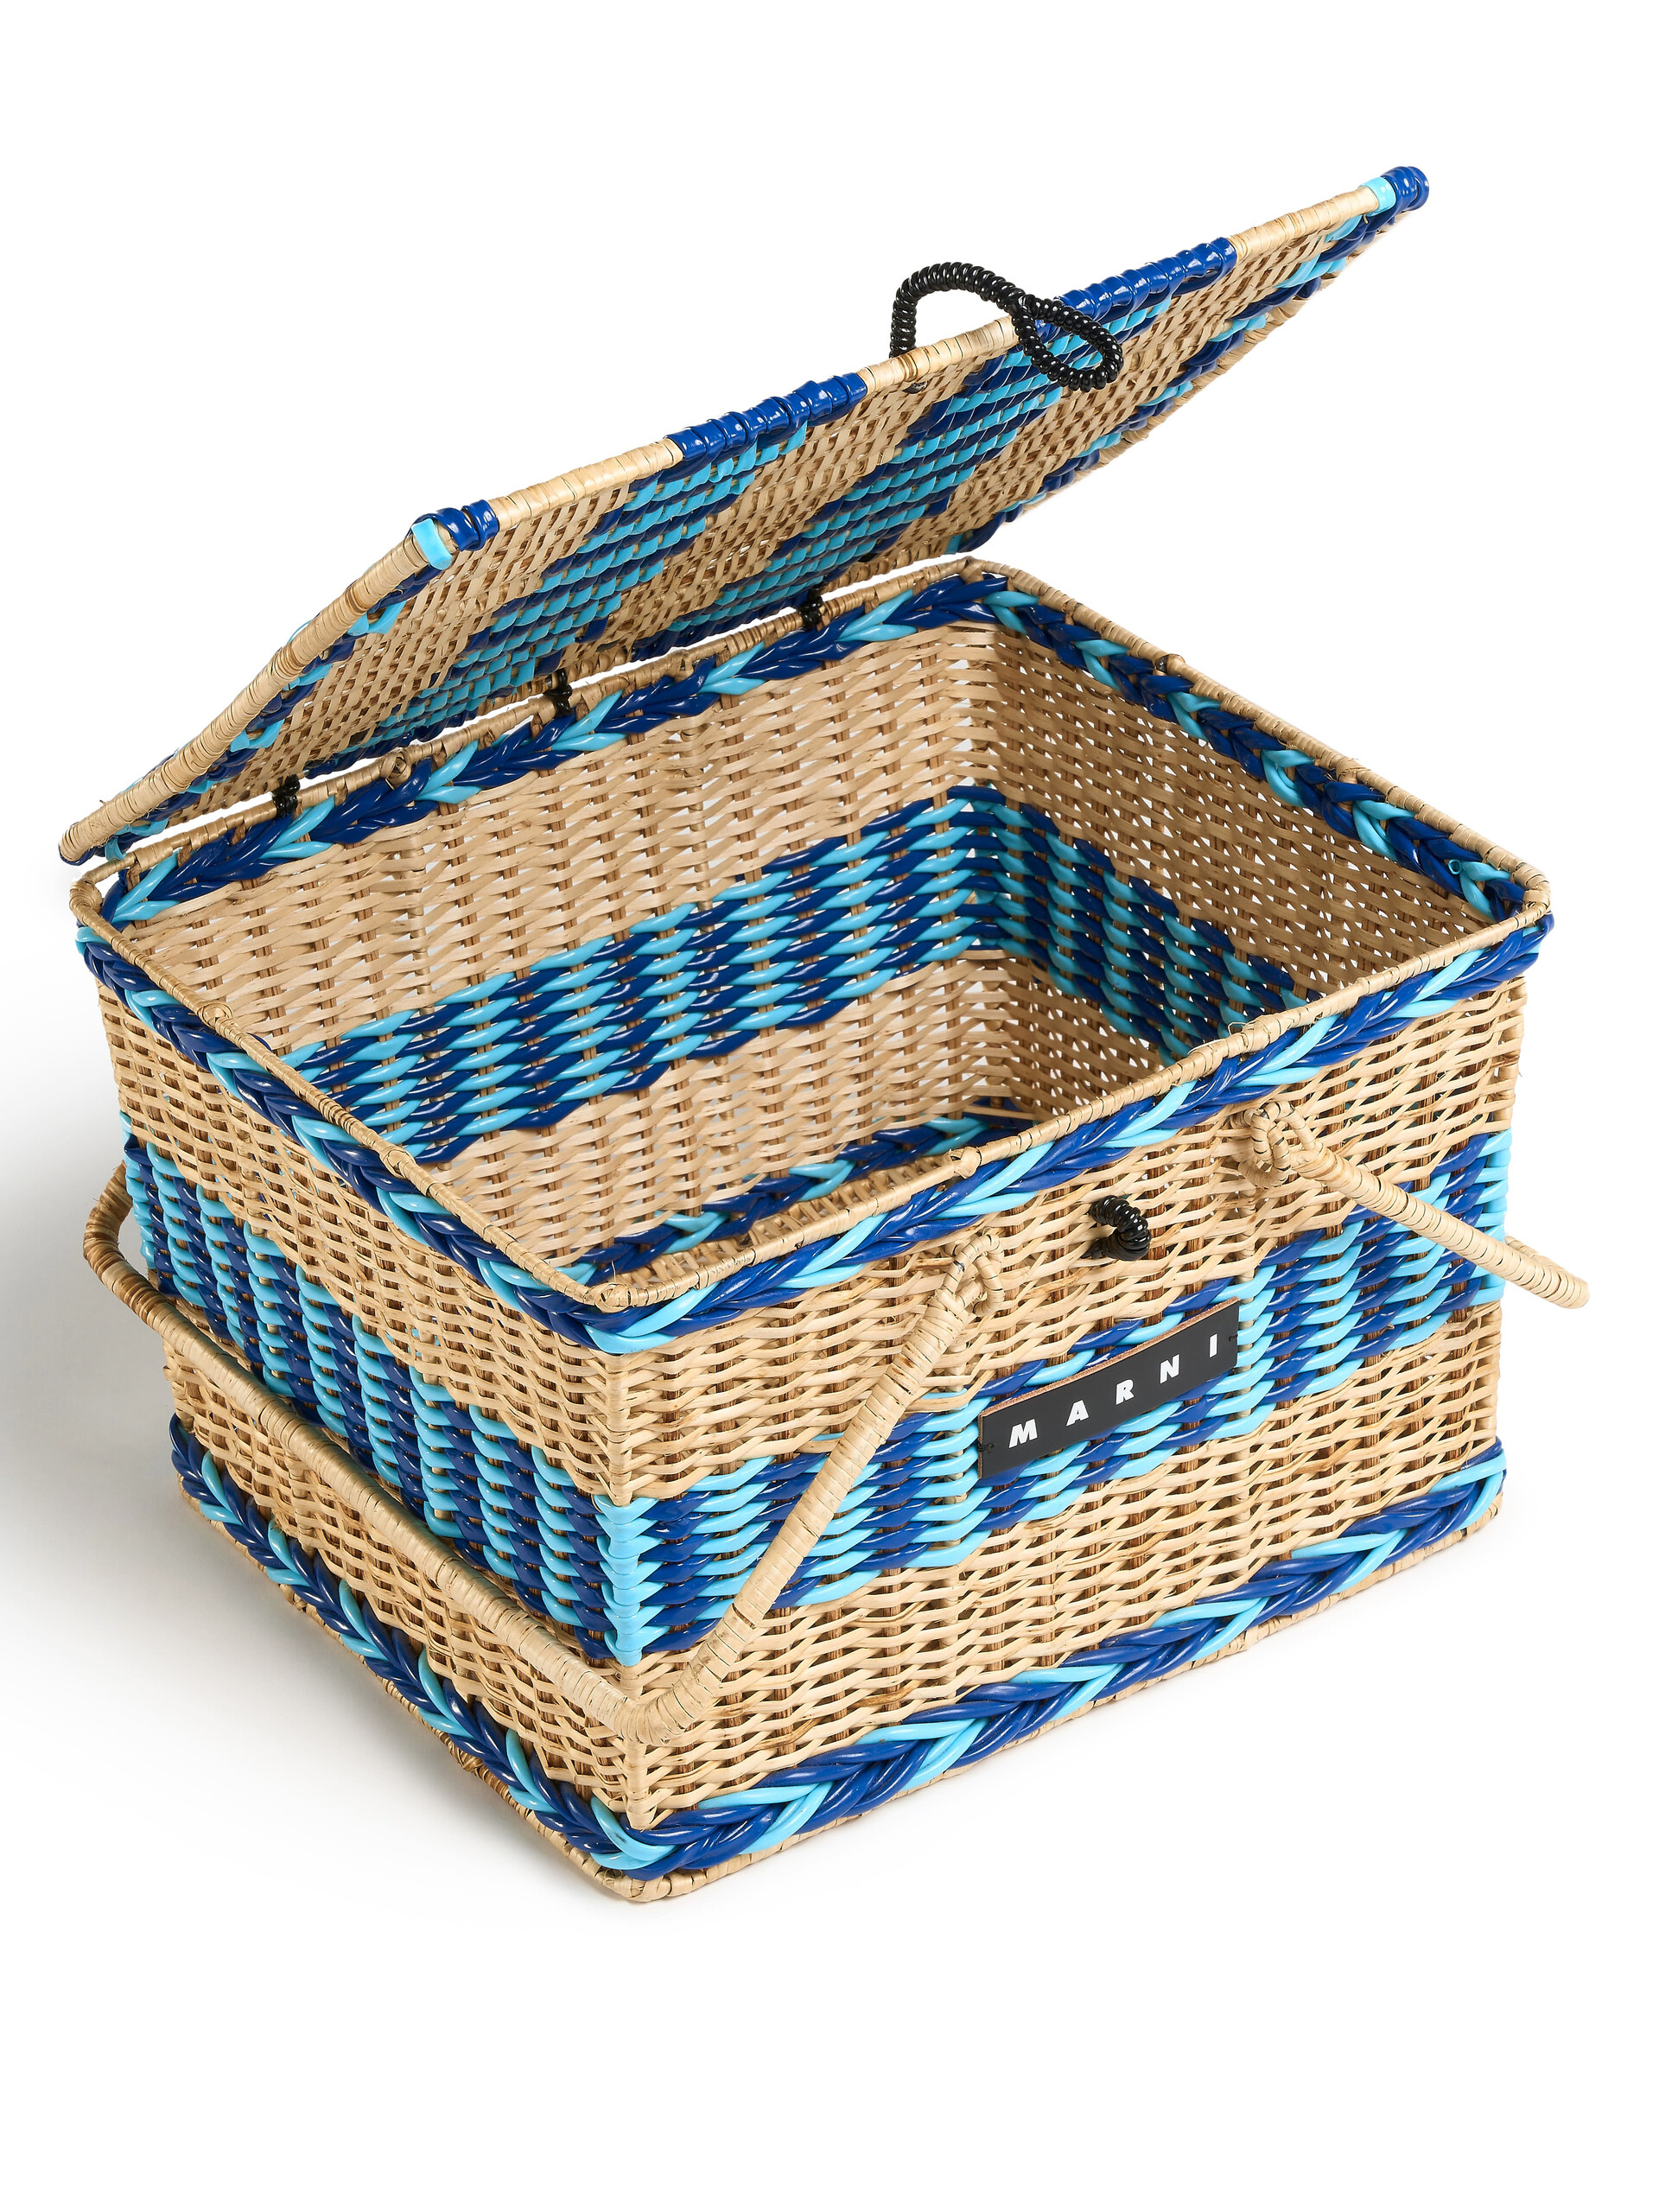 Blue and beige natural fibre MARNI MARKET picnic basket - Accessories - Image 4